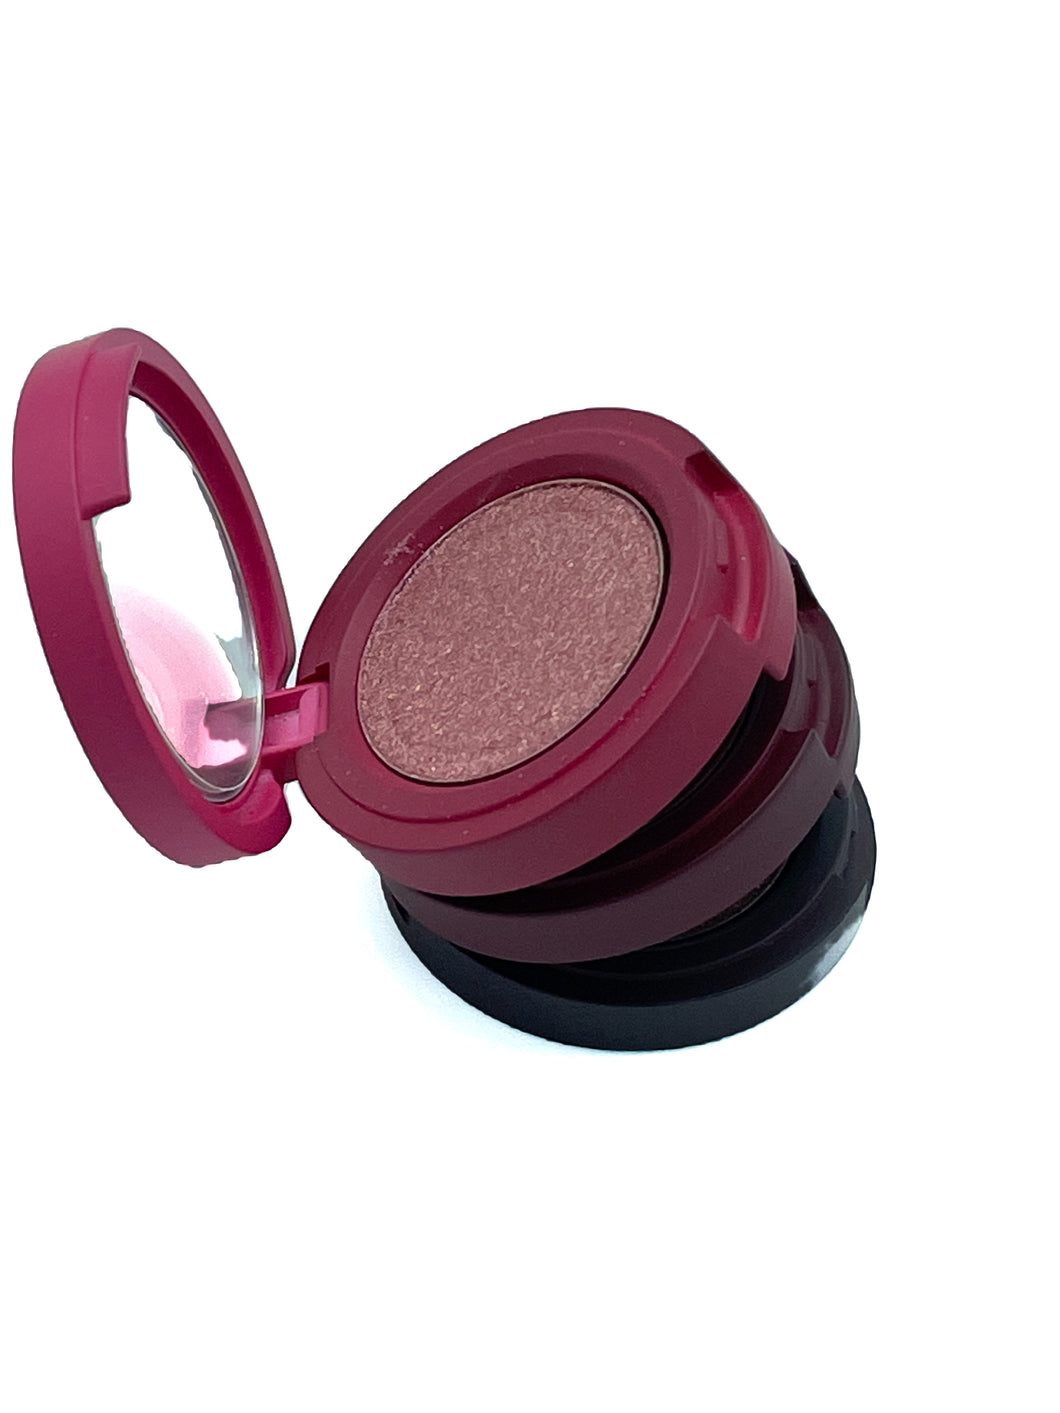 Kaja beauty bento eyeshadow trio | Sparkling Rosé - wine tones